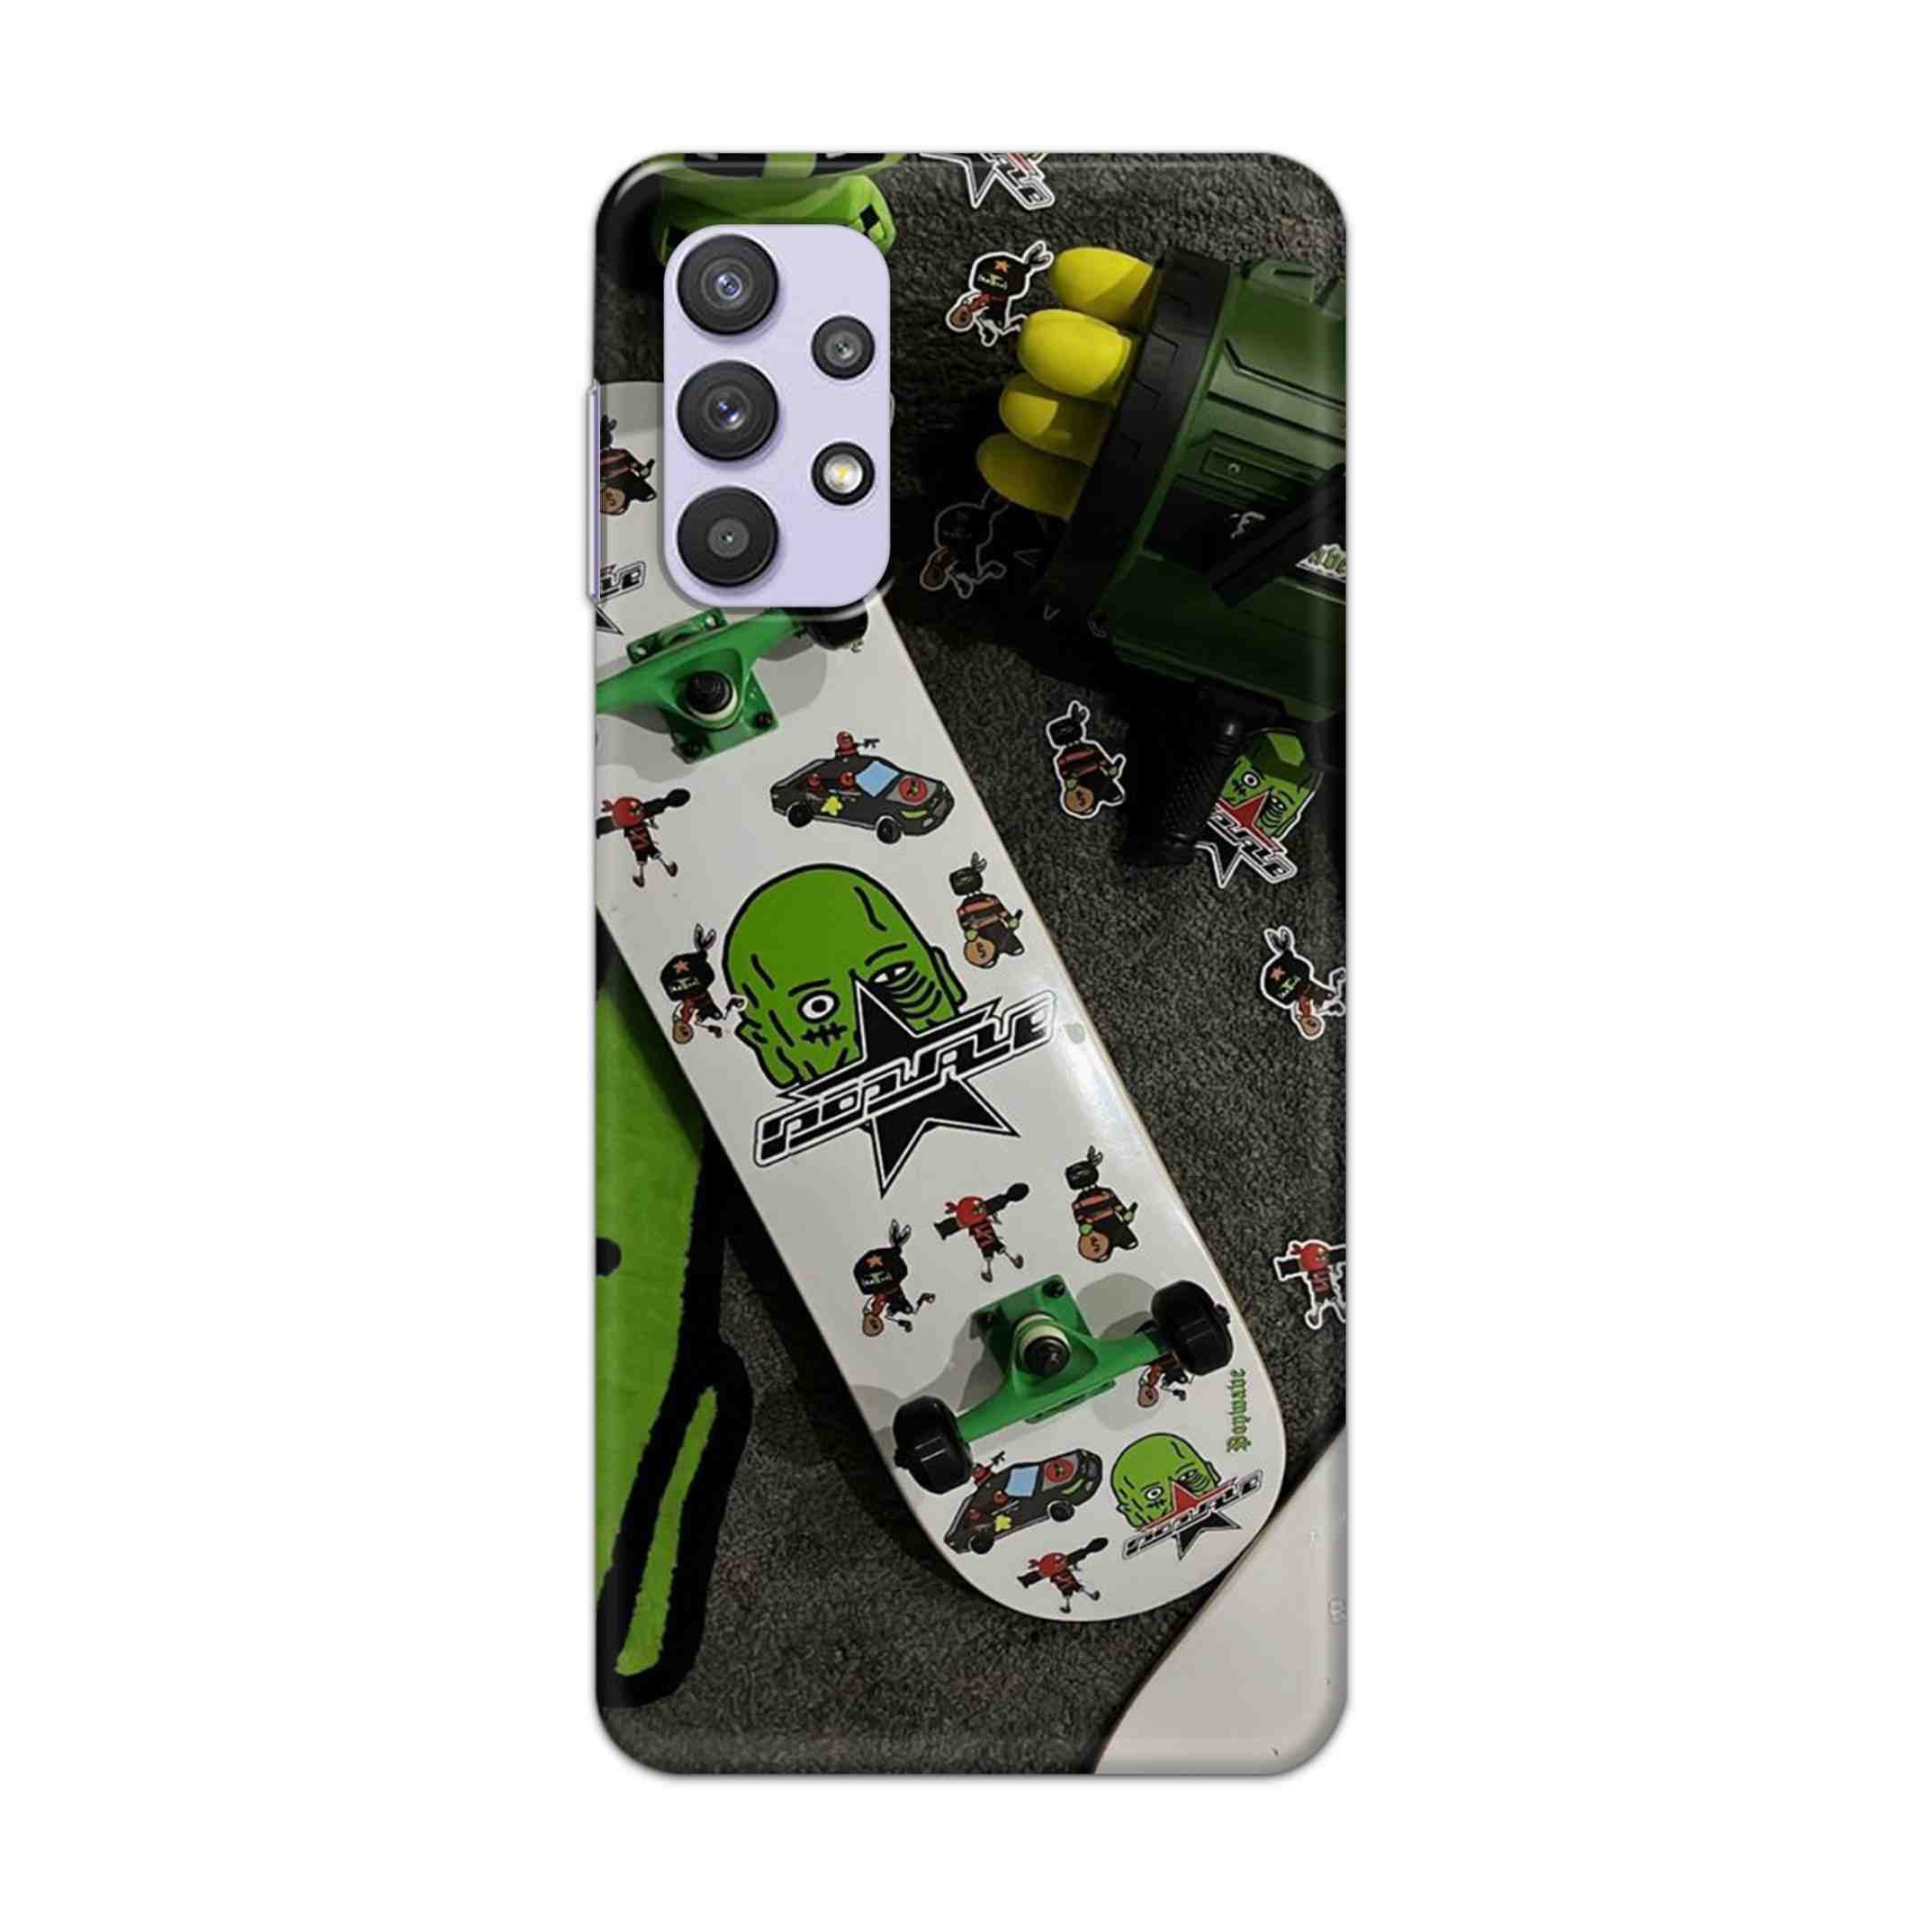 Buy Hulk Skateboard Hard Back Mobile Phone Case Cover For Samsung A32 5G Online